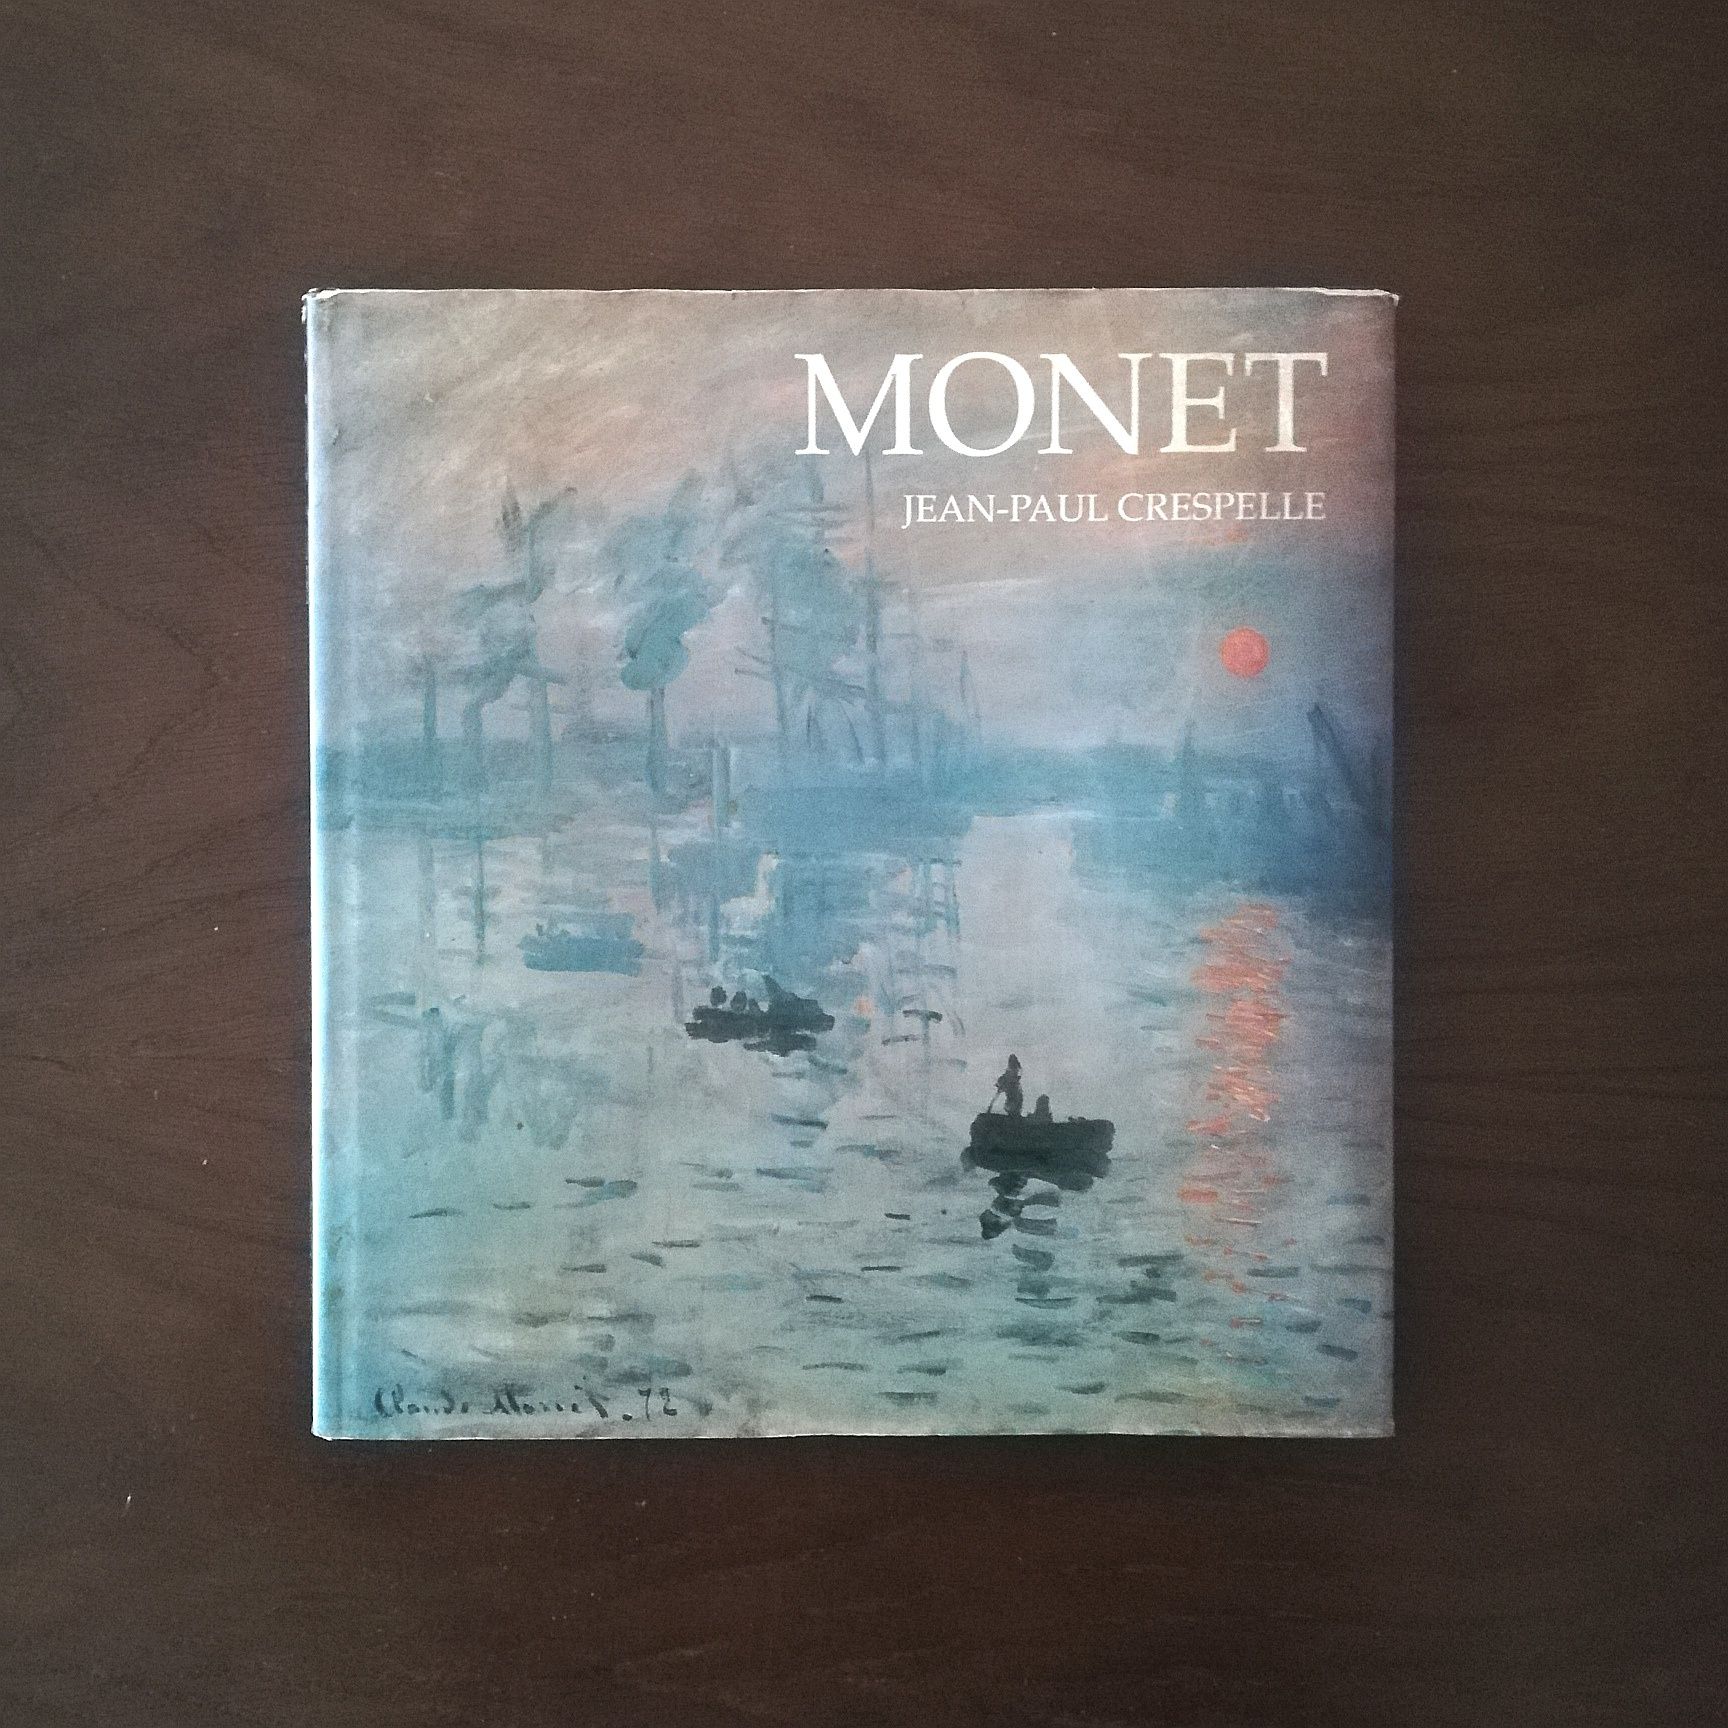 "Monet", de Jean-Paul Crespelle